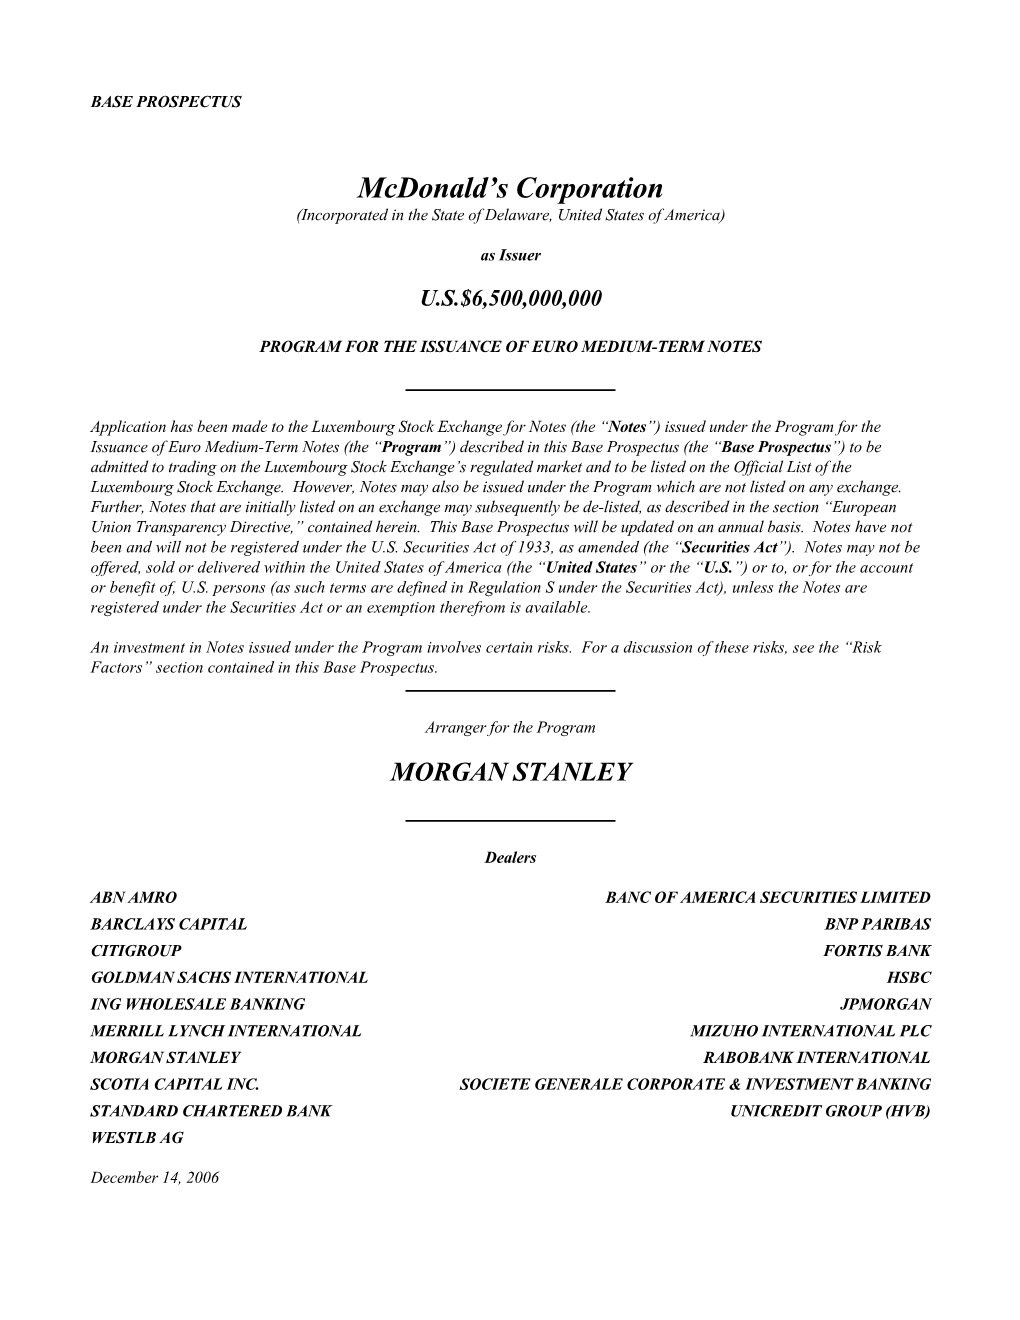 Mcdonald's Corporation